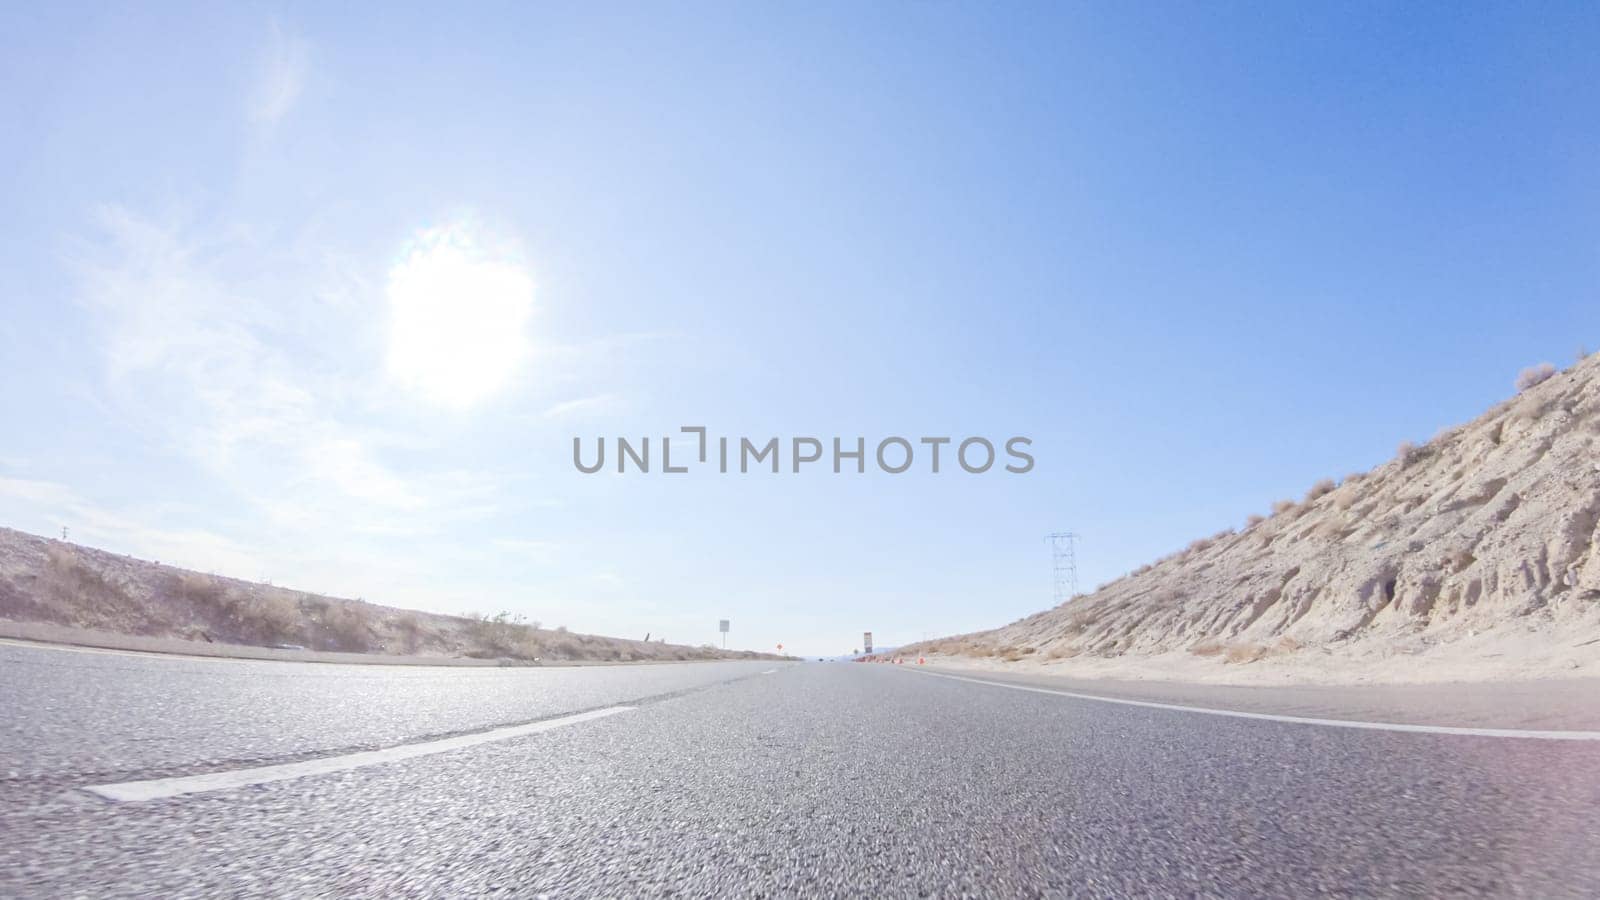 Daytime Road Trip: Nevada to California on HWY 15 by arinahabich